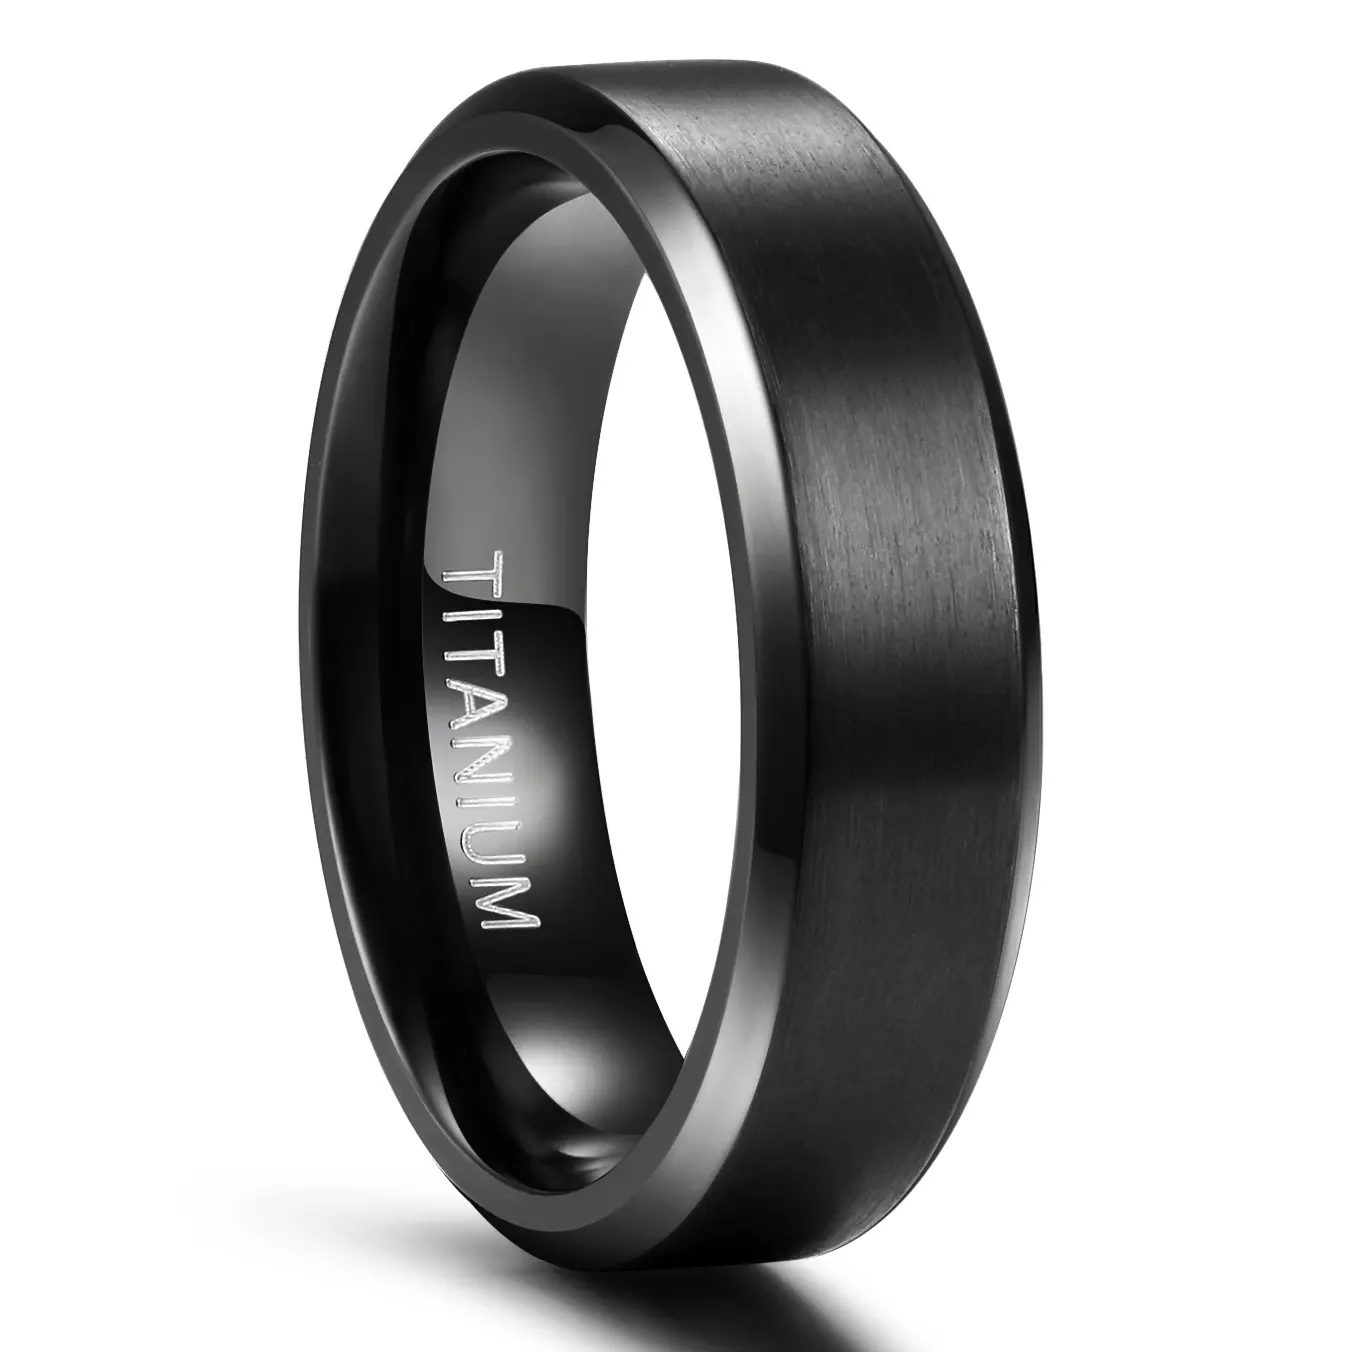 Somen 6mm 8mm Titanium Ring Men Women Black Matte Wedding Engagement Band Brushed Unisex Couple Rings Fashion Jewelry Size 6-14